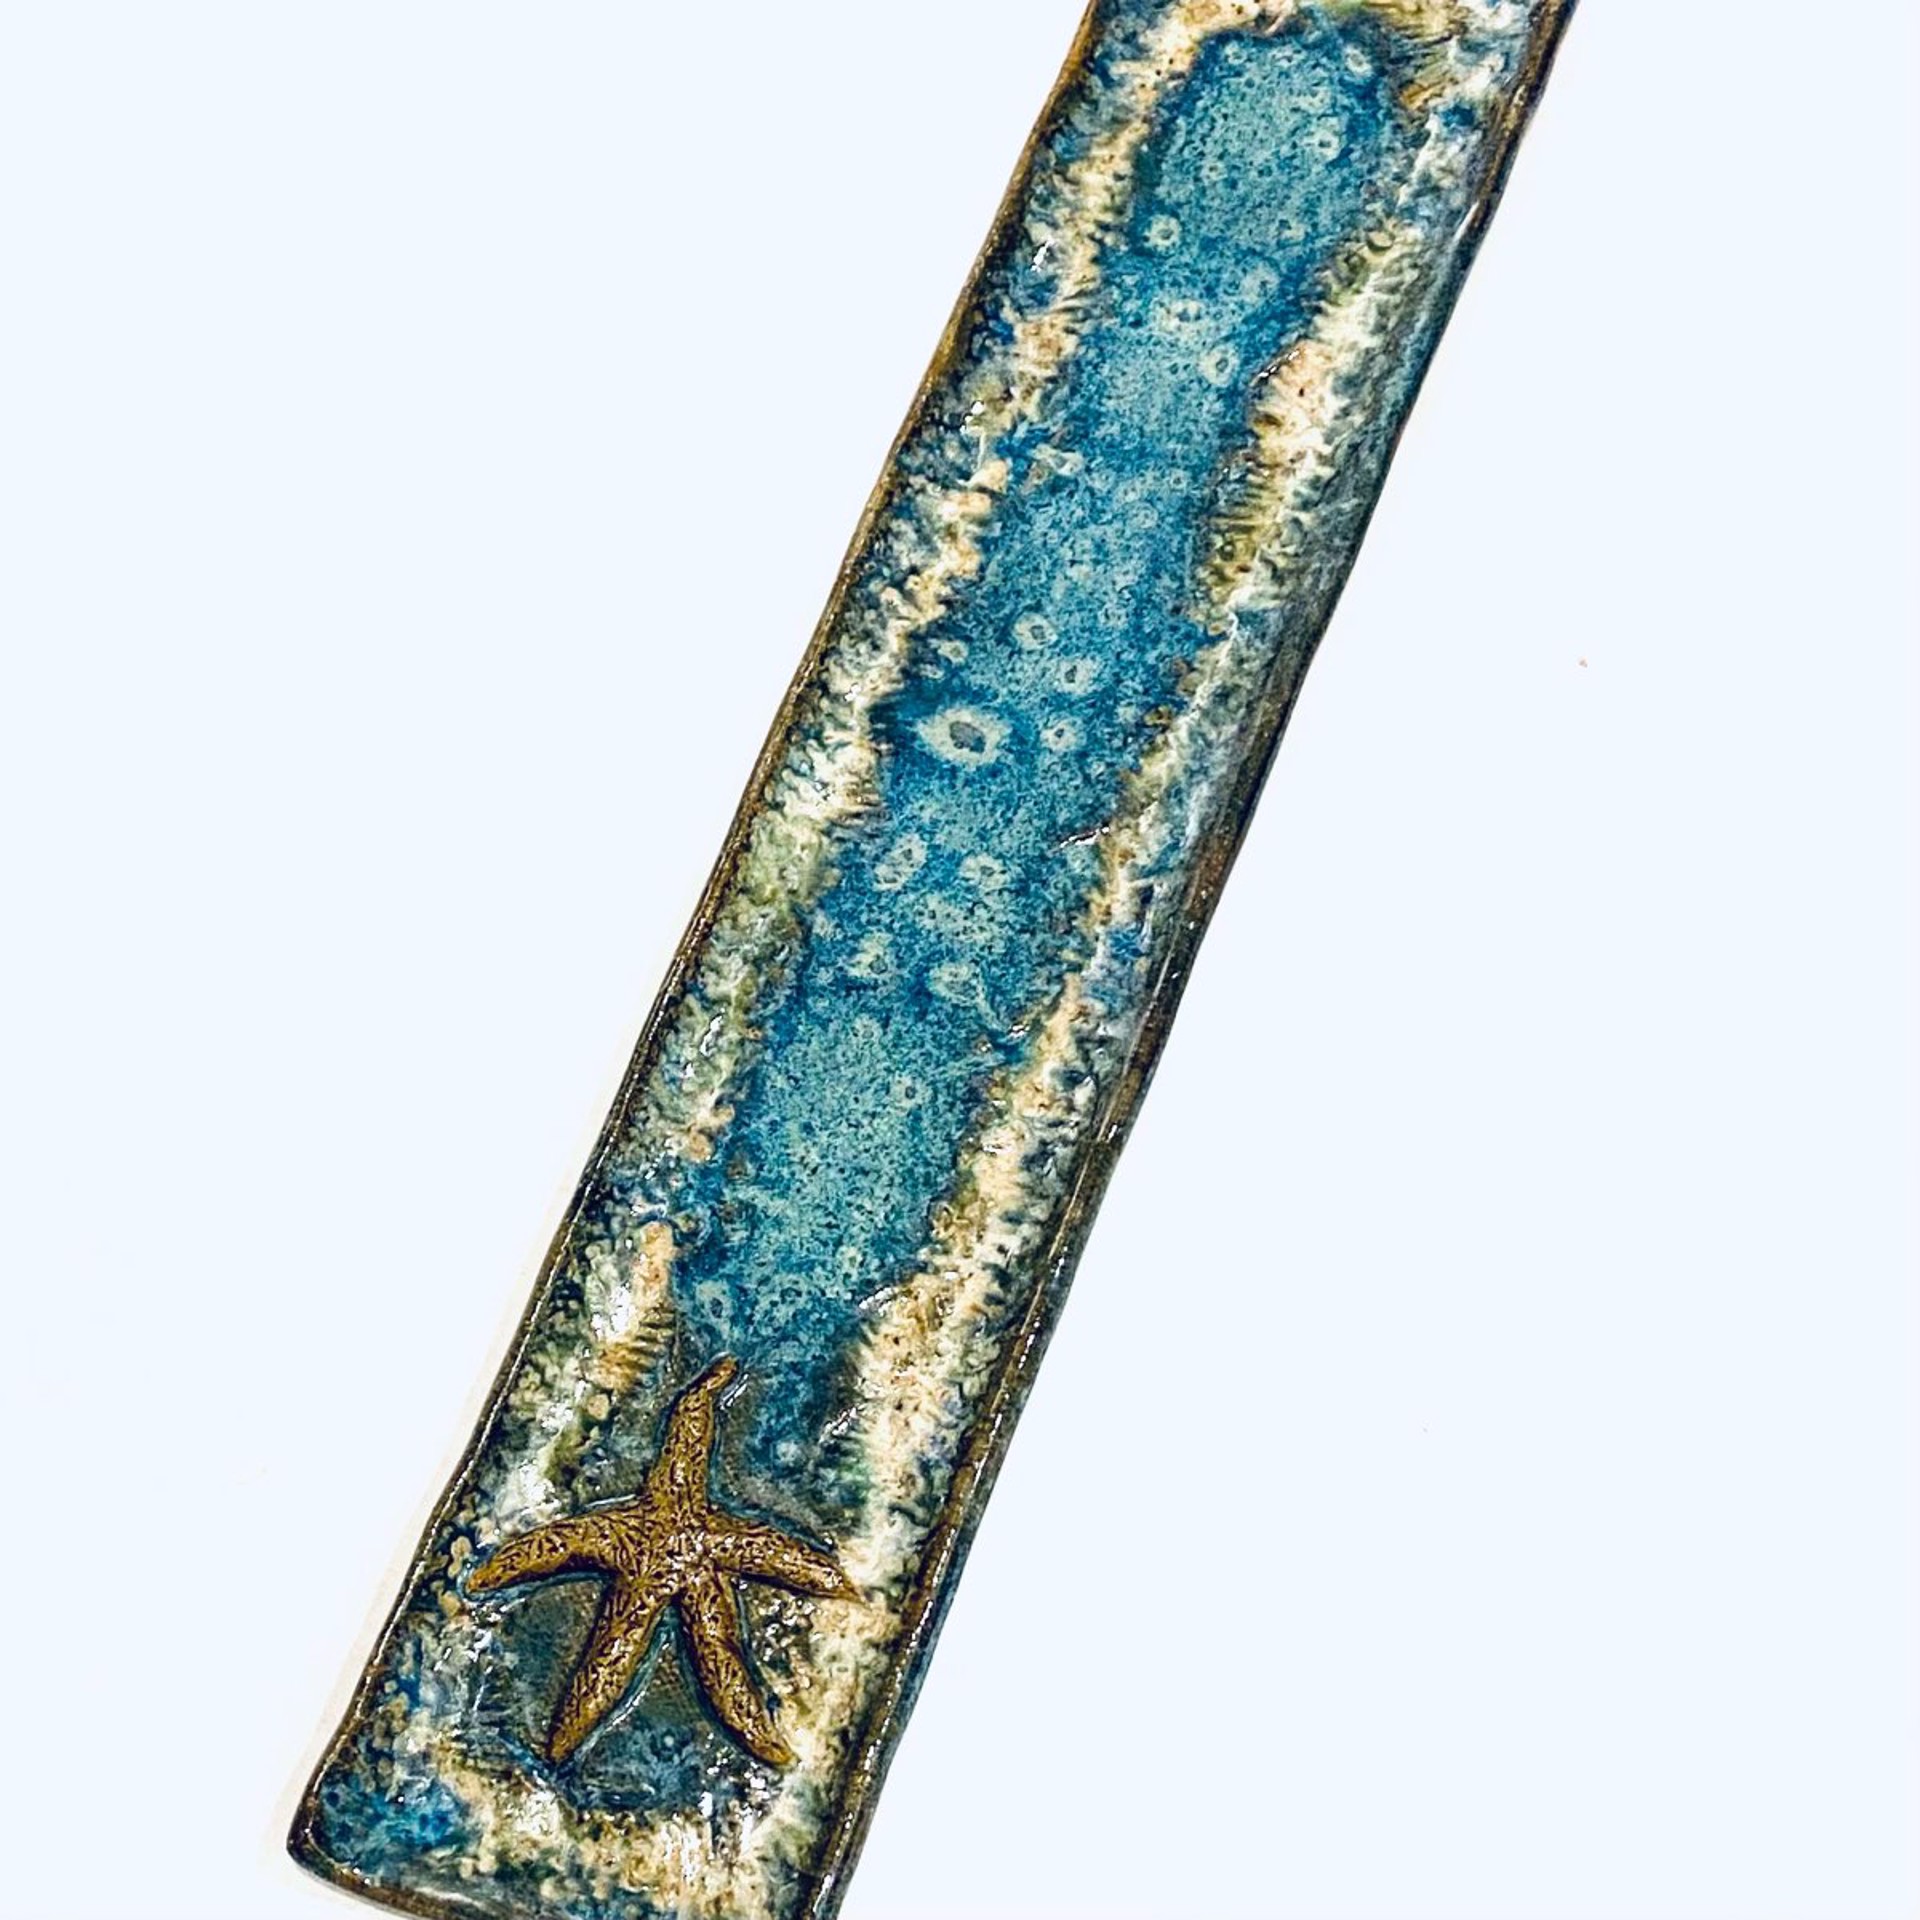 Logan22-839 Olive Tray with One Starfish (Blue Glaze) by Jim & Steffi Logan